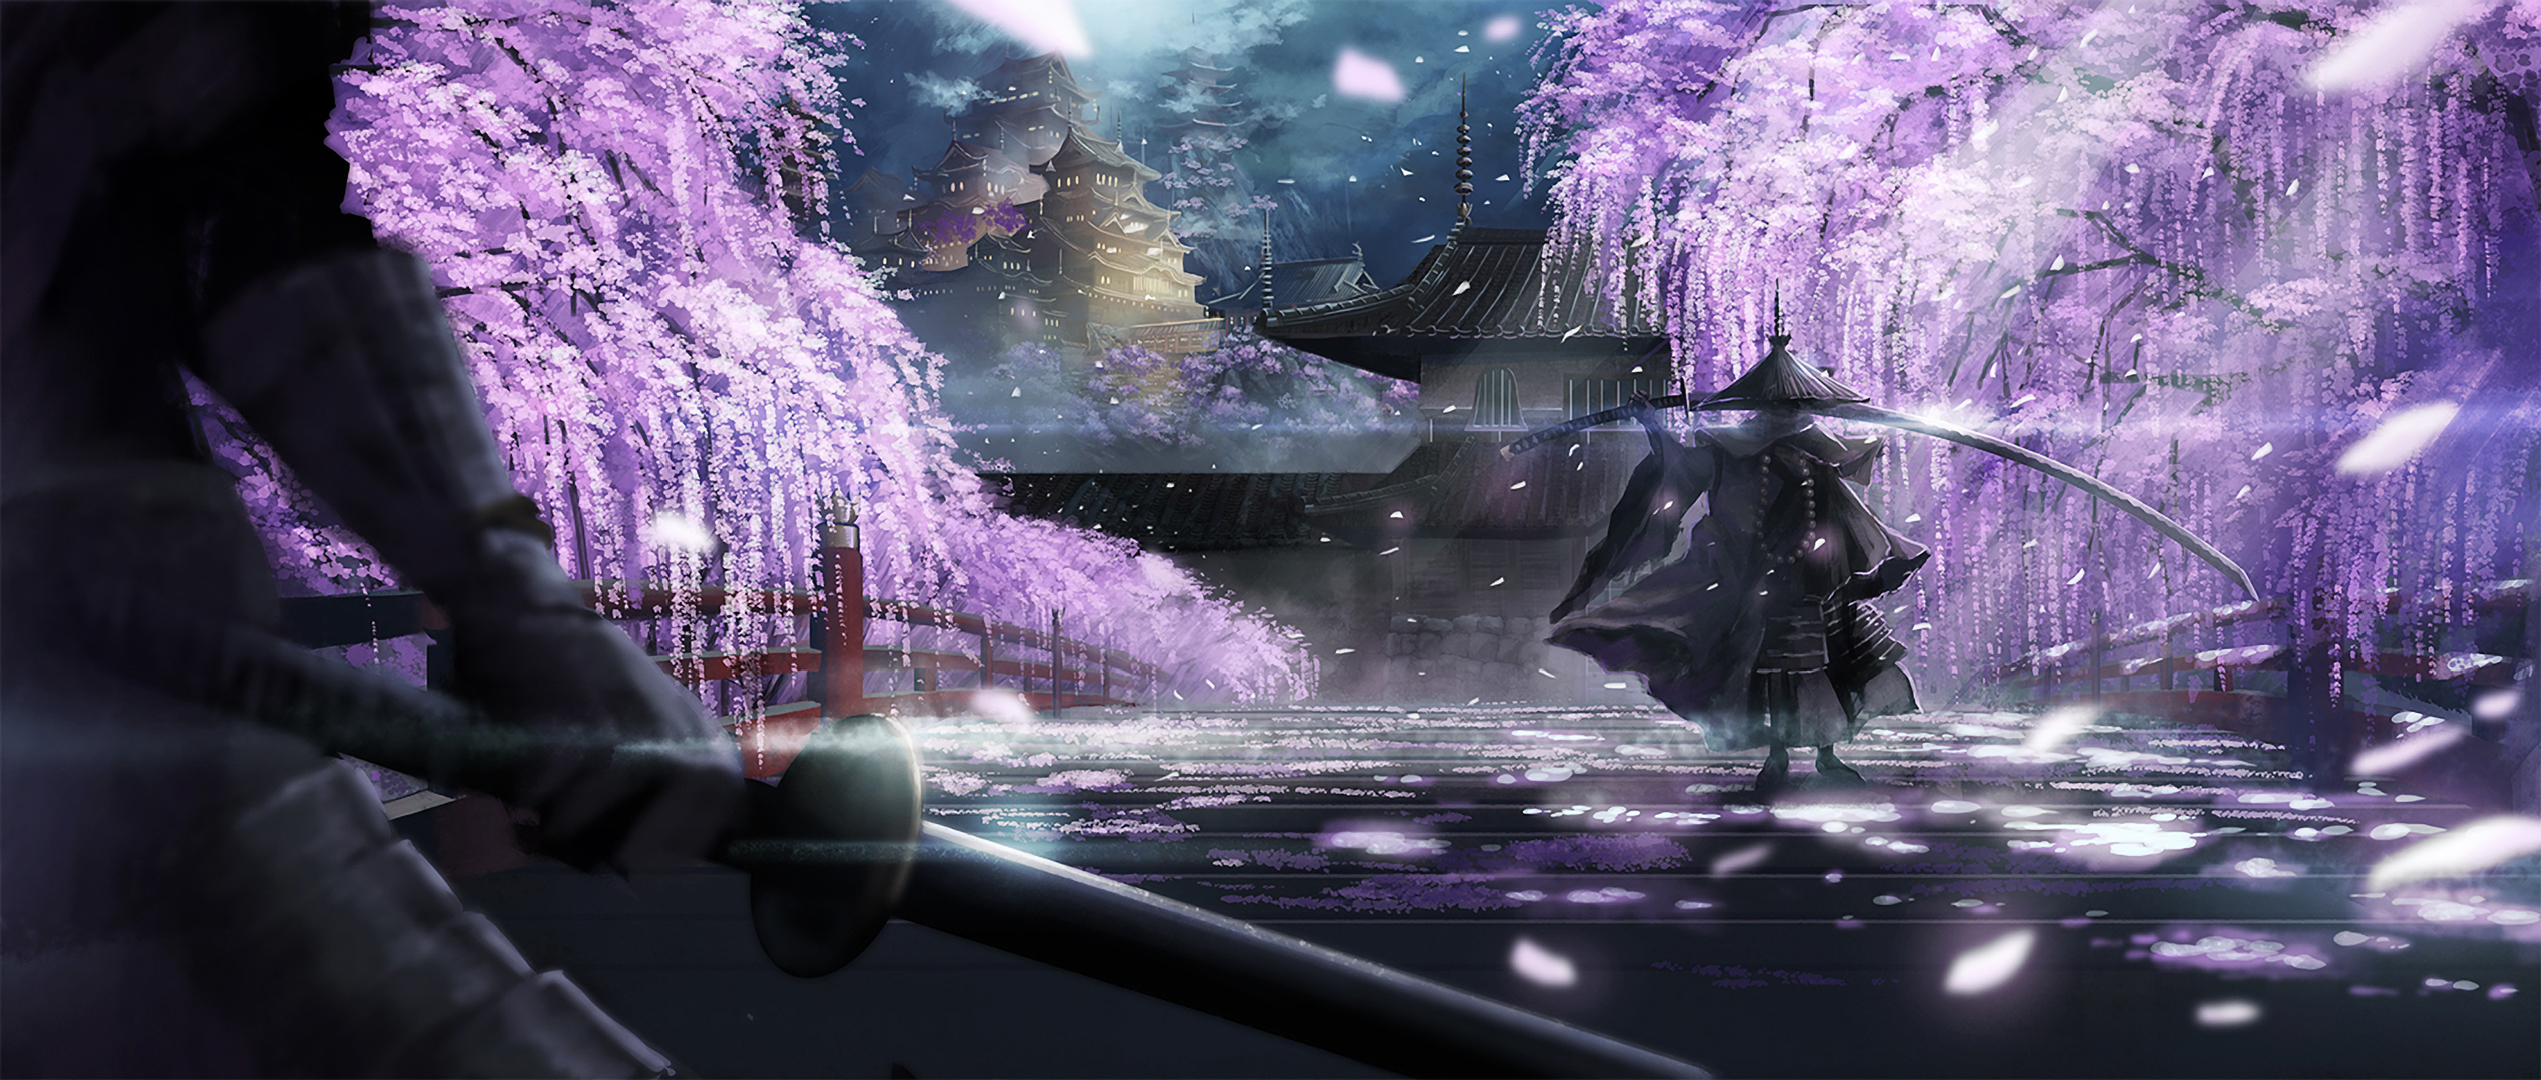 Fantasy Samurai HD Wallpaper by えす